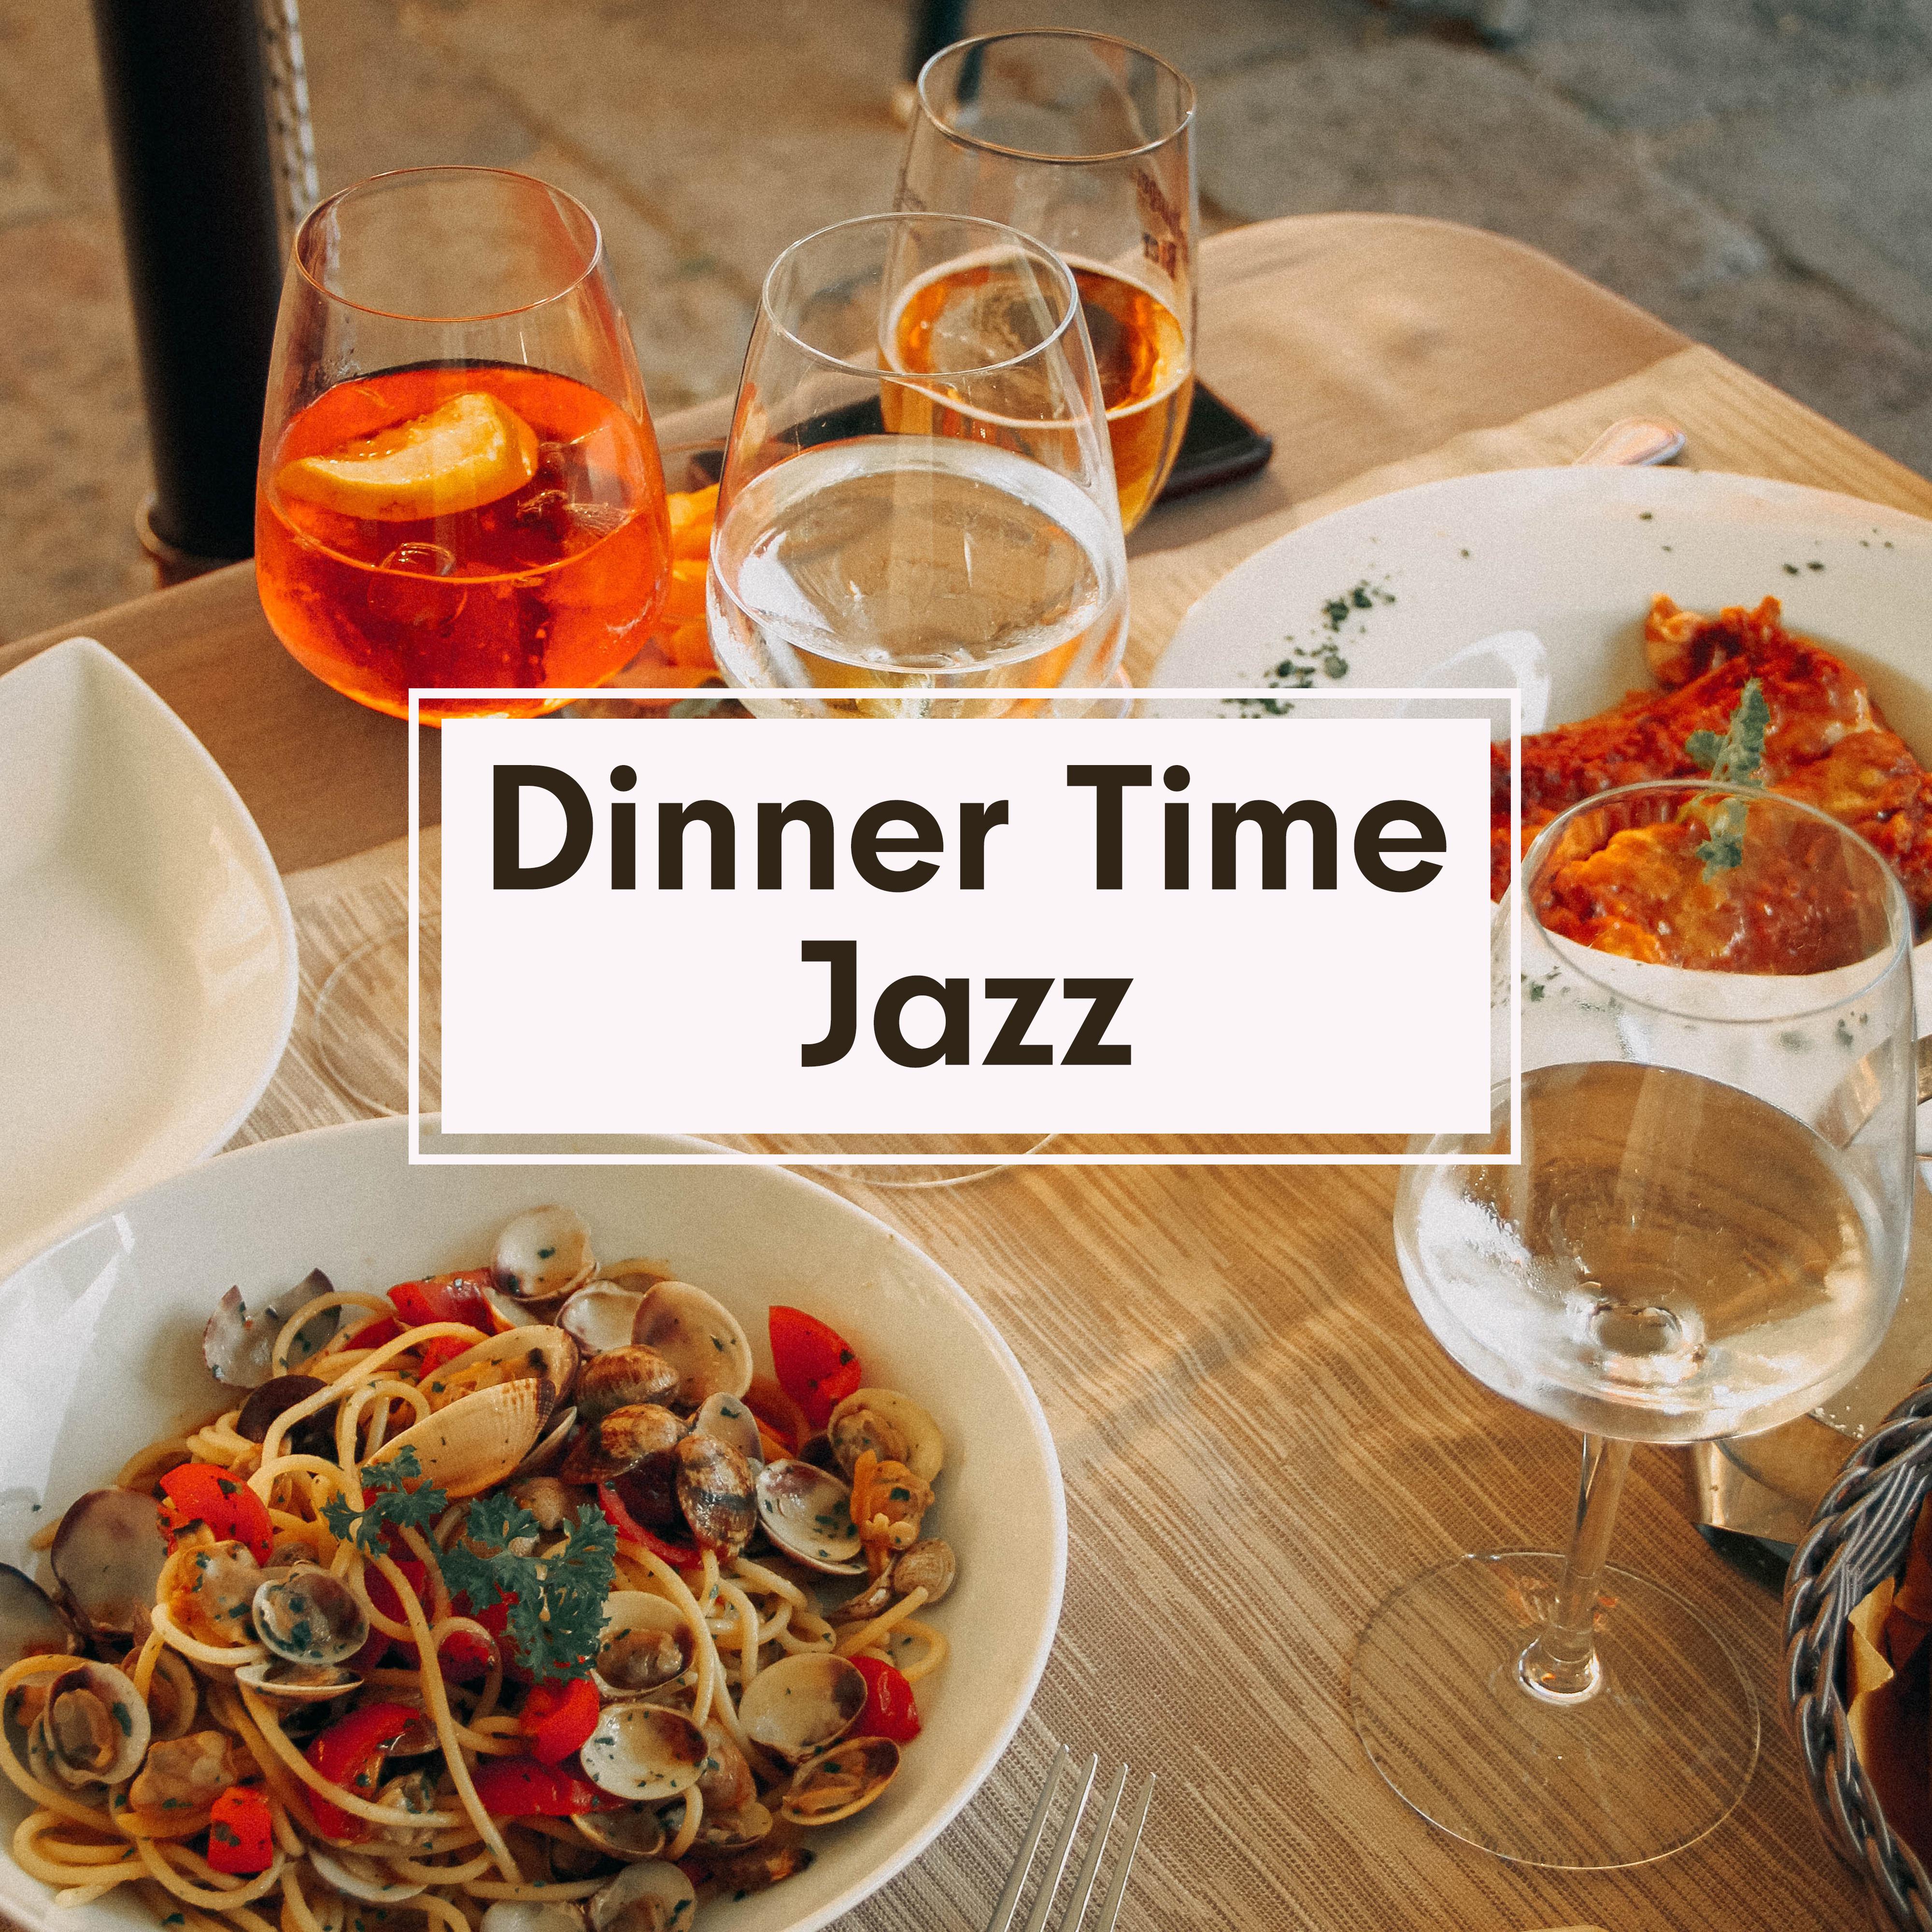 Dinner Time Jazz  15 Relaxing Sounds for Restaurant, Relax, Rest, Dinner Jazz 2019, Smooth Music, Mellow Jazz 2019